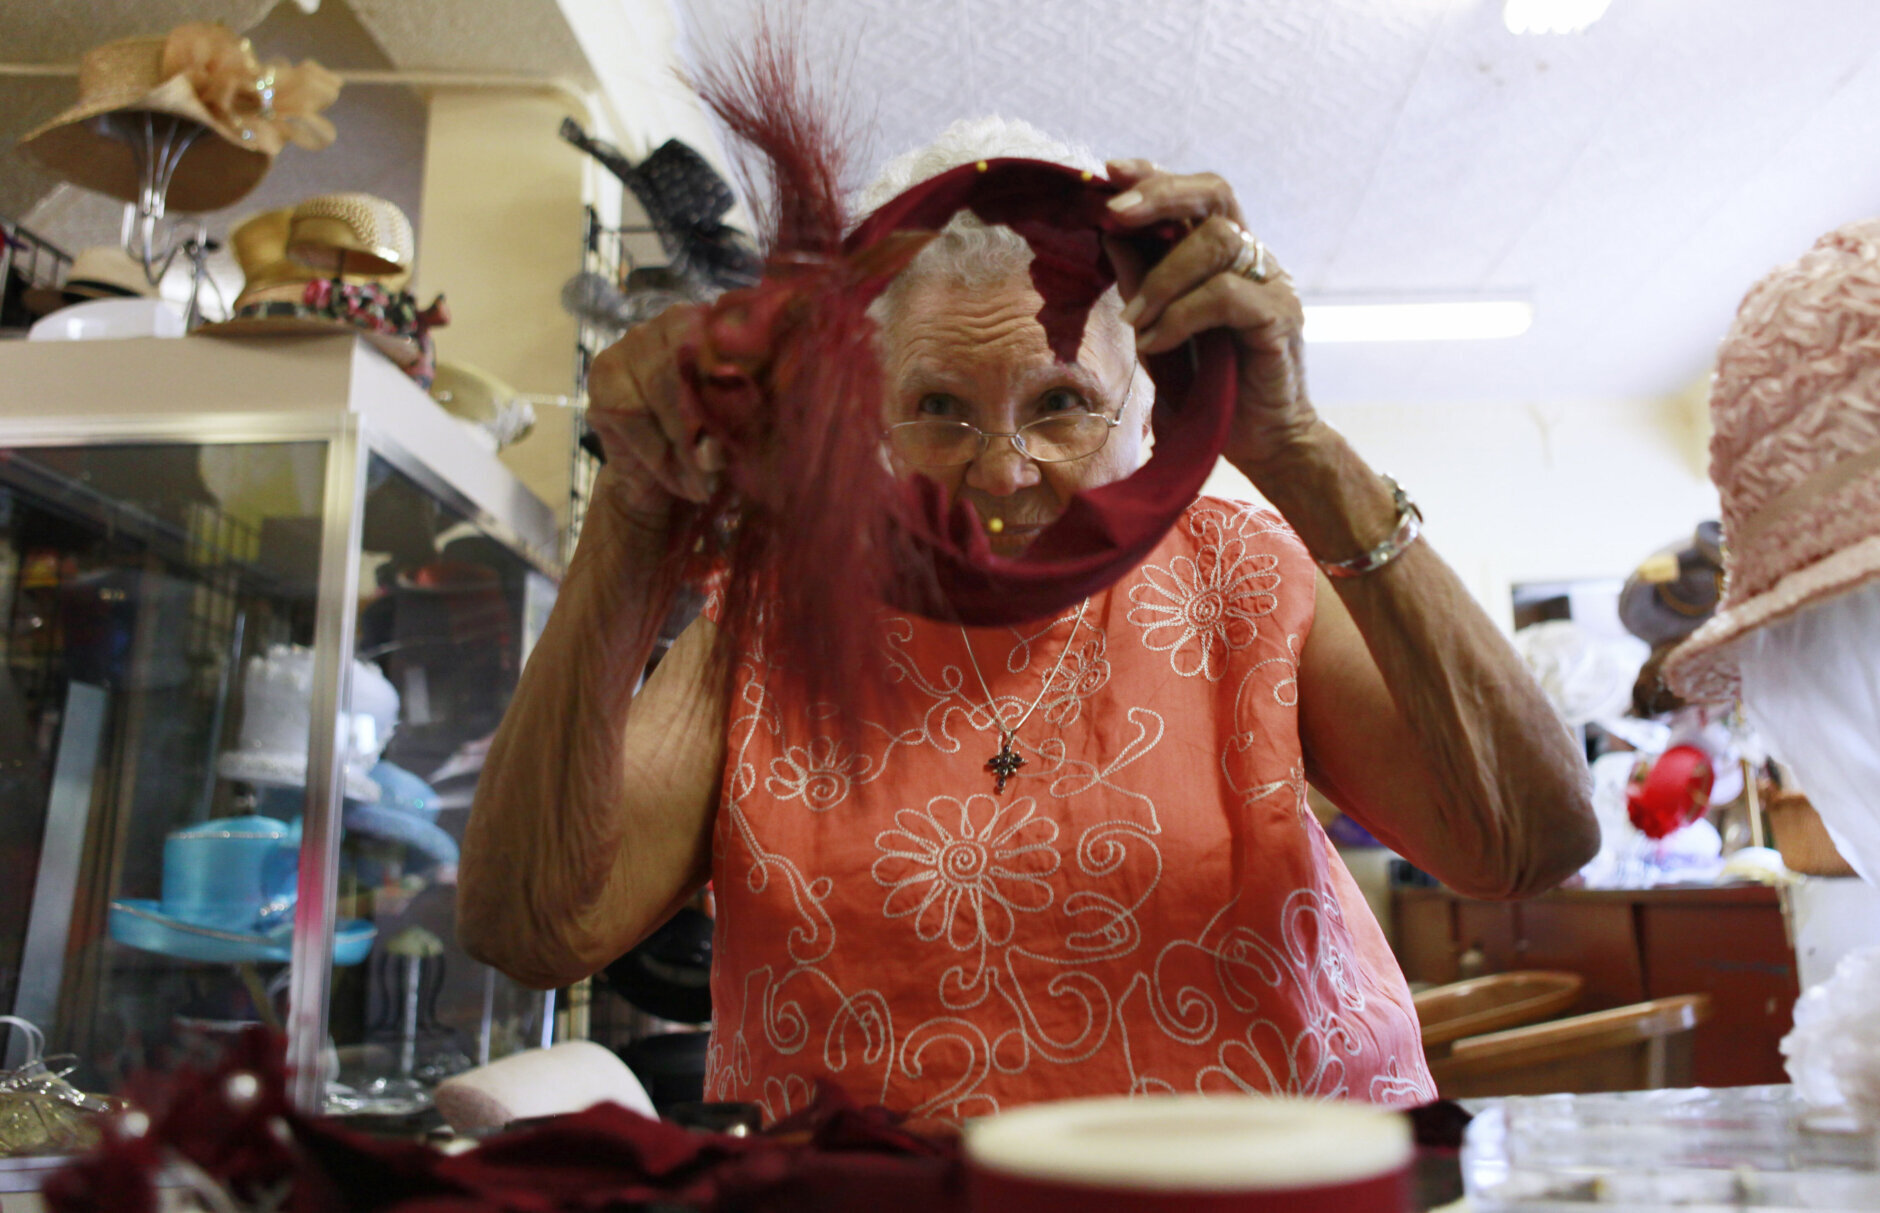 Washington milliner Vanilla Beane, 90, works on a hat design in her shop, Bene', in Washington, Thursday, June 10, 2010. (AP Photo/Jacquelyn Martin)